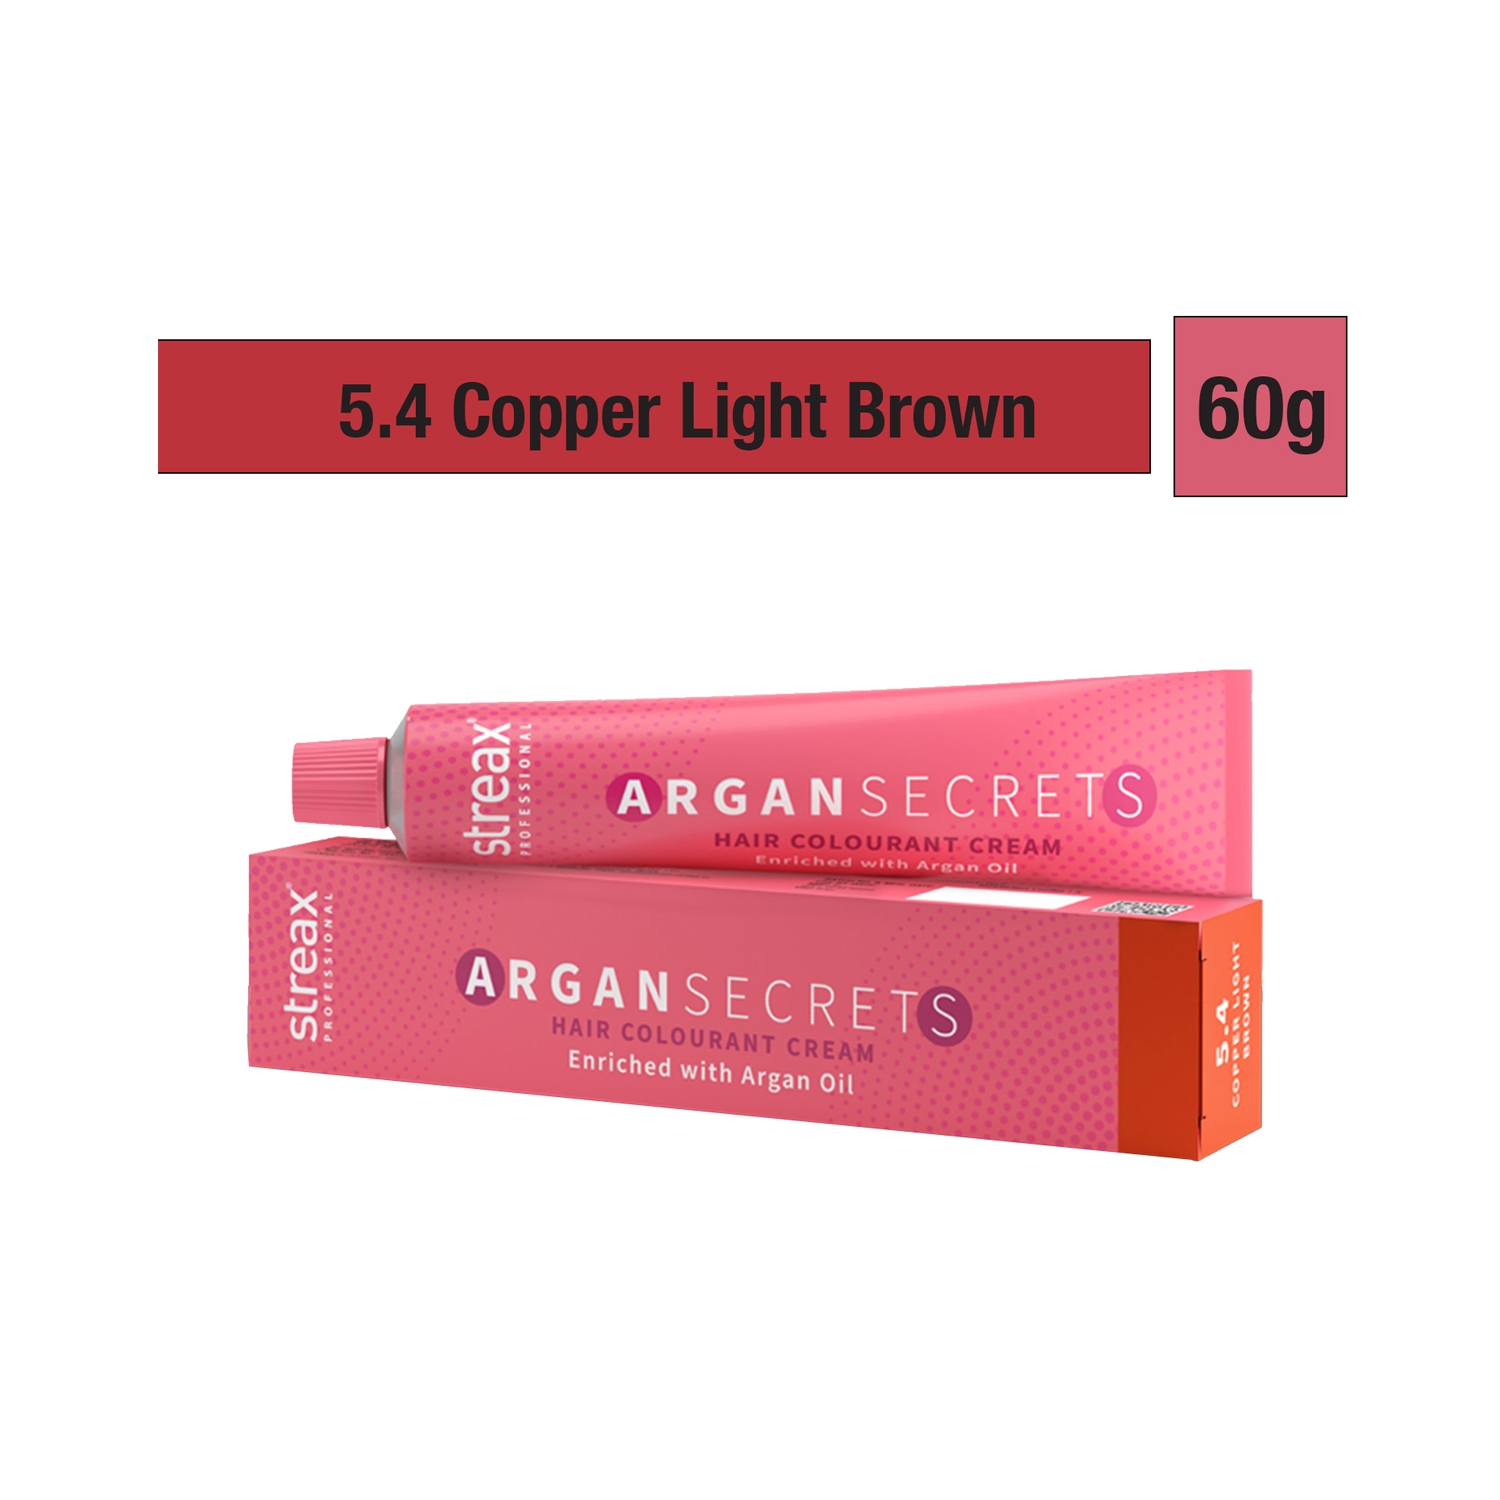 Streax Professional | Streax Professional Argan Secrets Hair Colorant Cream - 5.4 Copper Light Brown (60g)